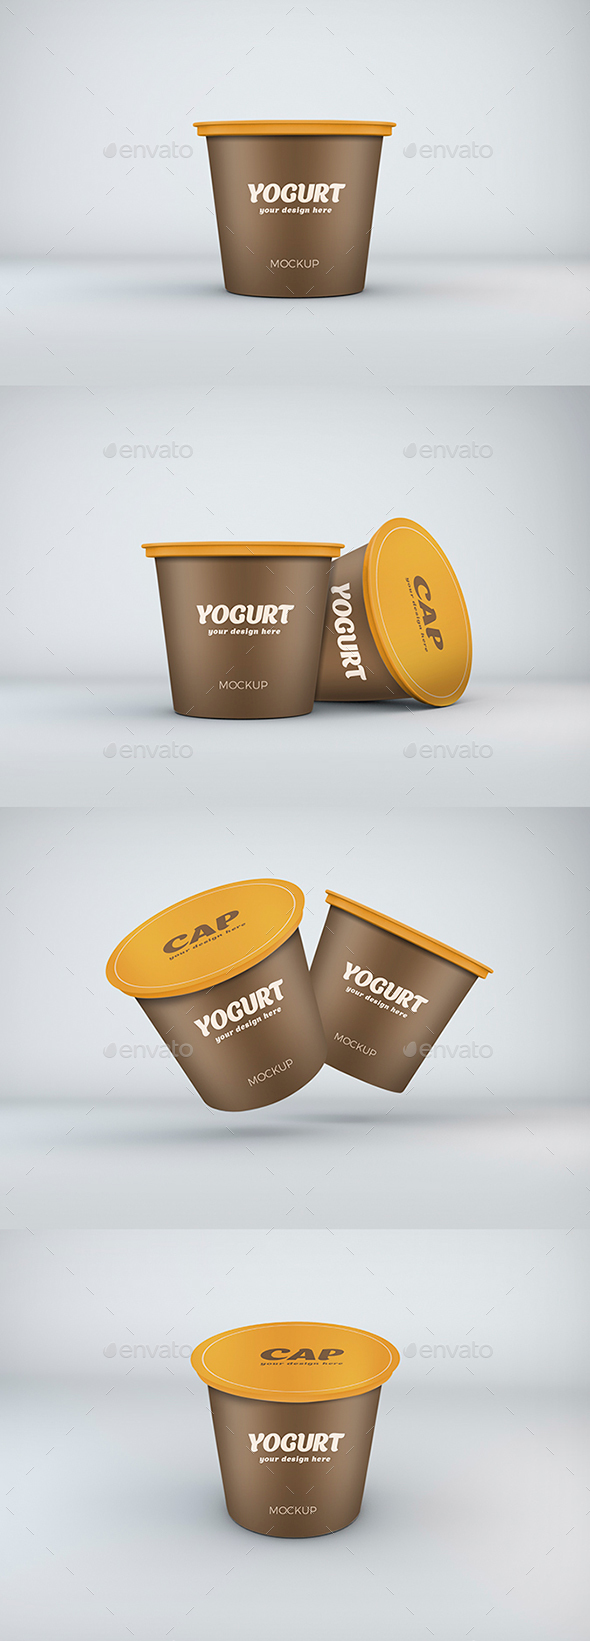 Yogurt Mockup Graphics Vectors From Graphicriver